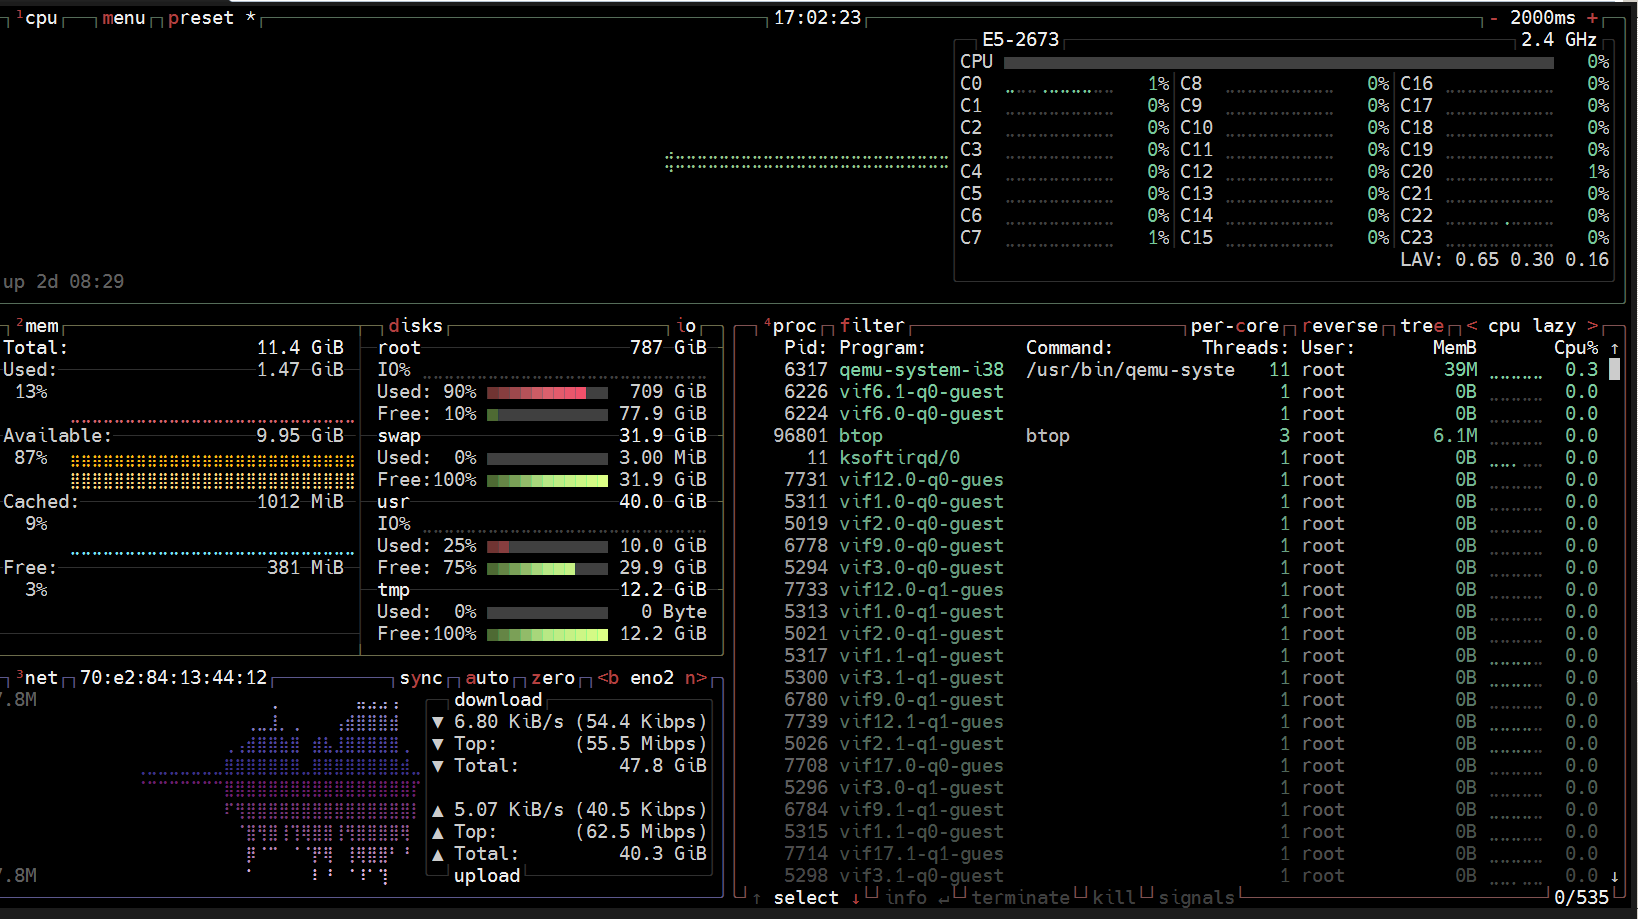 btop-linux-monitoring-console-beautiful-colorful-tool-graphics-screenshot